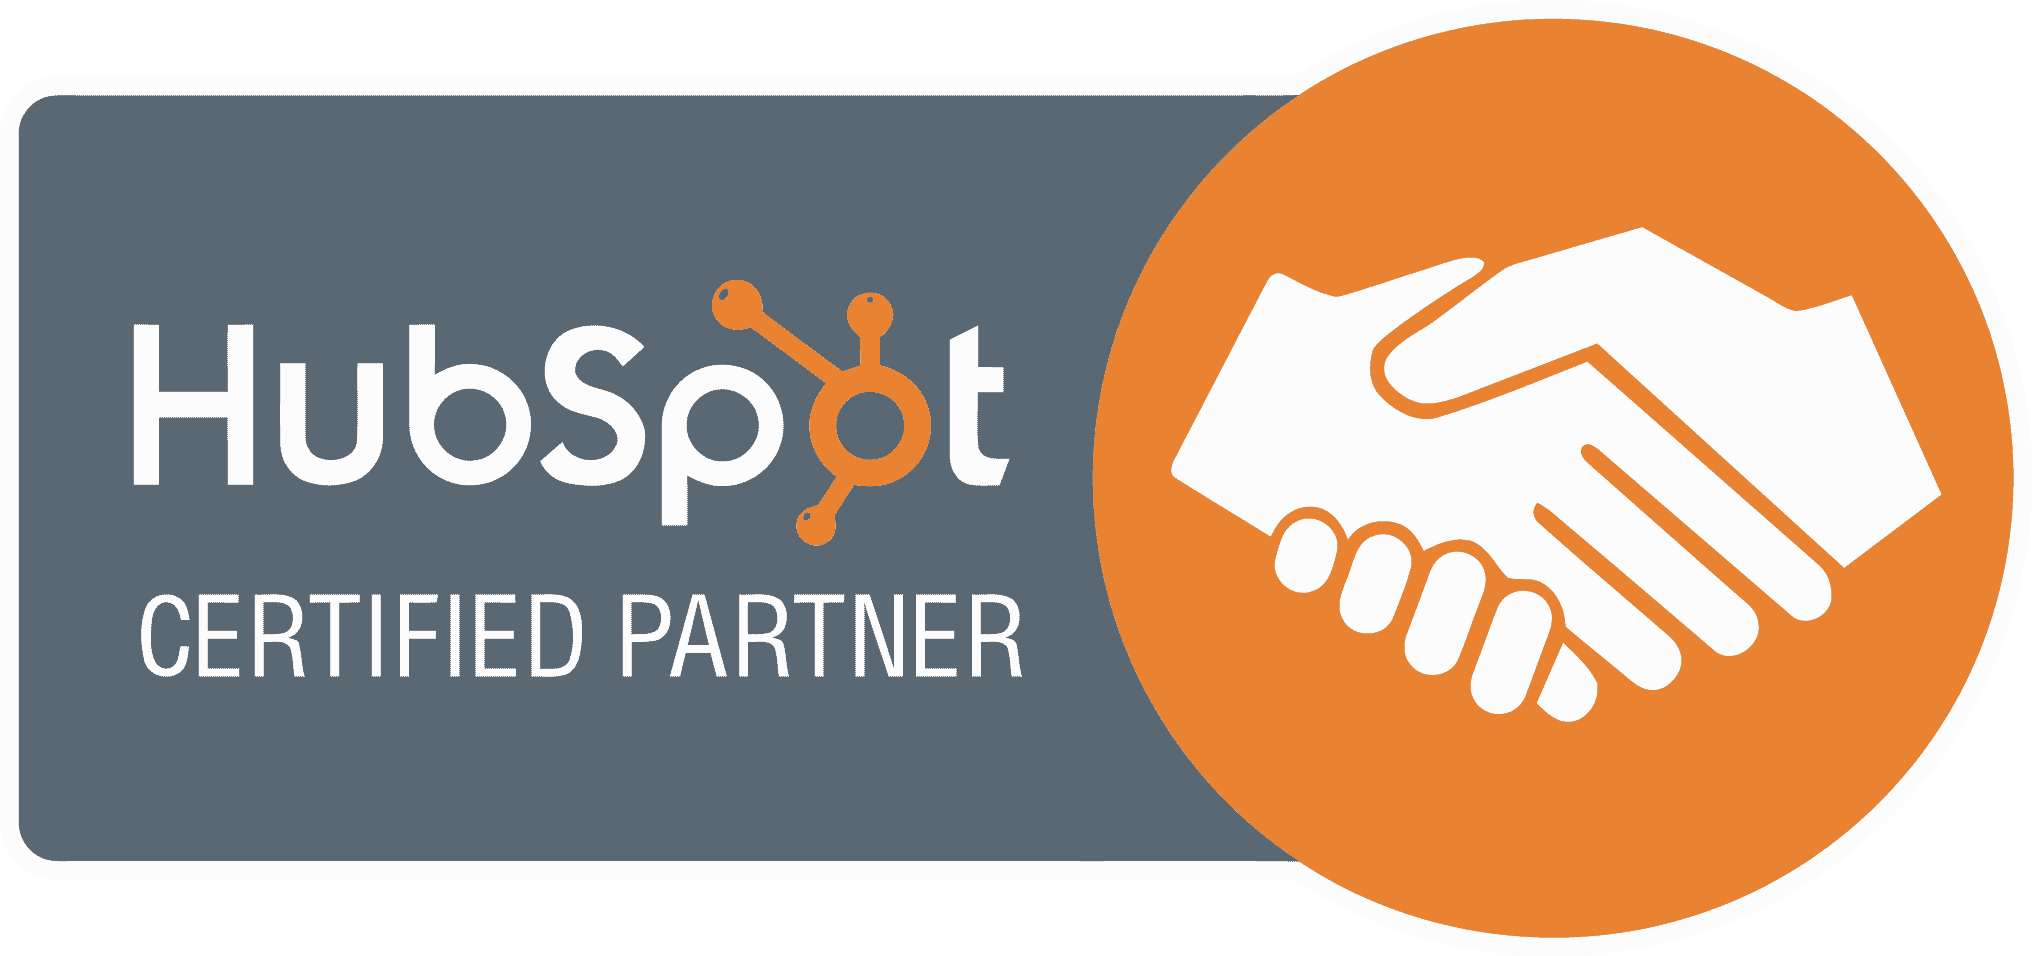 hubspot-certified-partner-logo